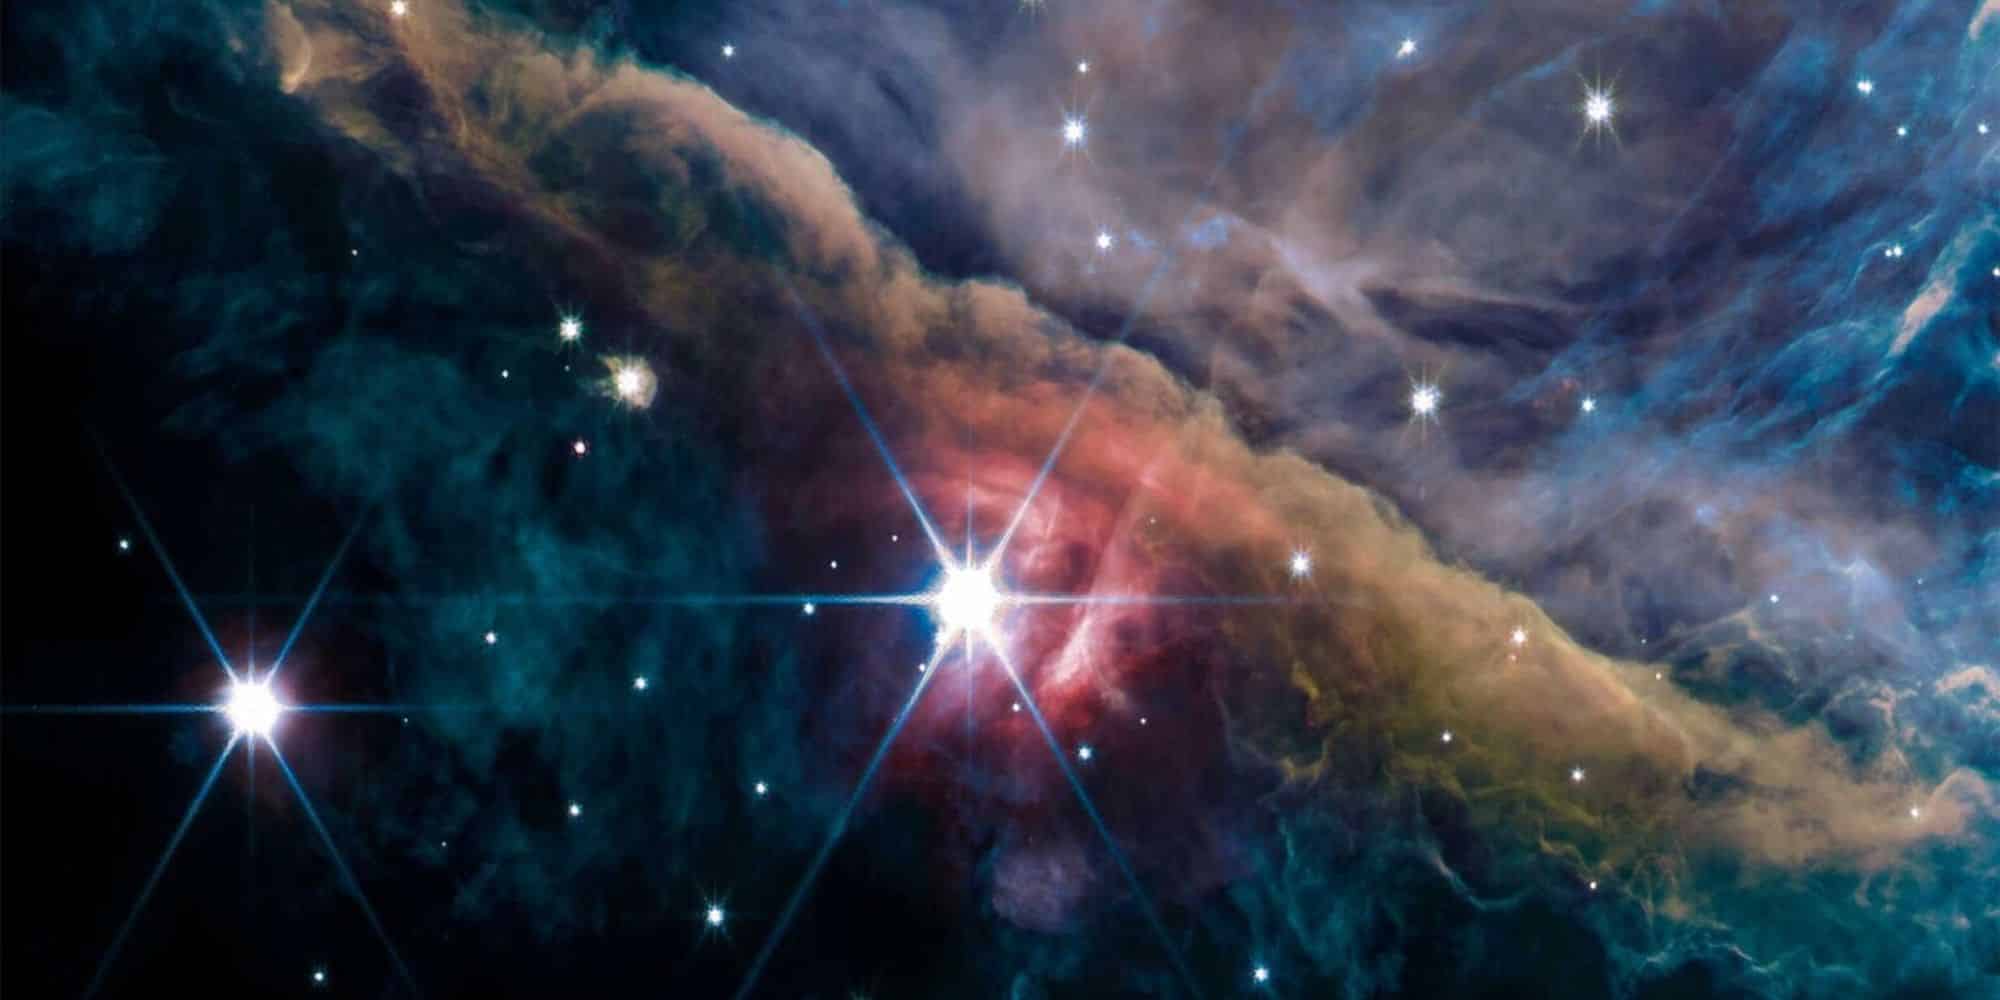 Tileskopio symban 13 9 22 - NASA: Εντυπωσιακές εικόνες από το νεφέλωμα του Ωρίωνα κατέγραψε το διαστημικό τηλεσκόπιο James Webb (βίντεο)